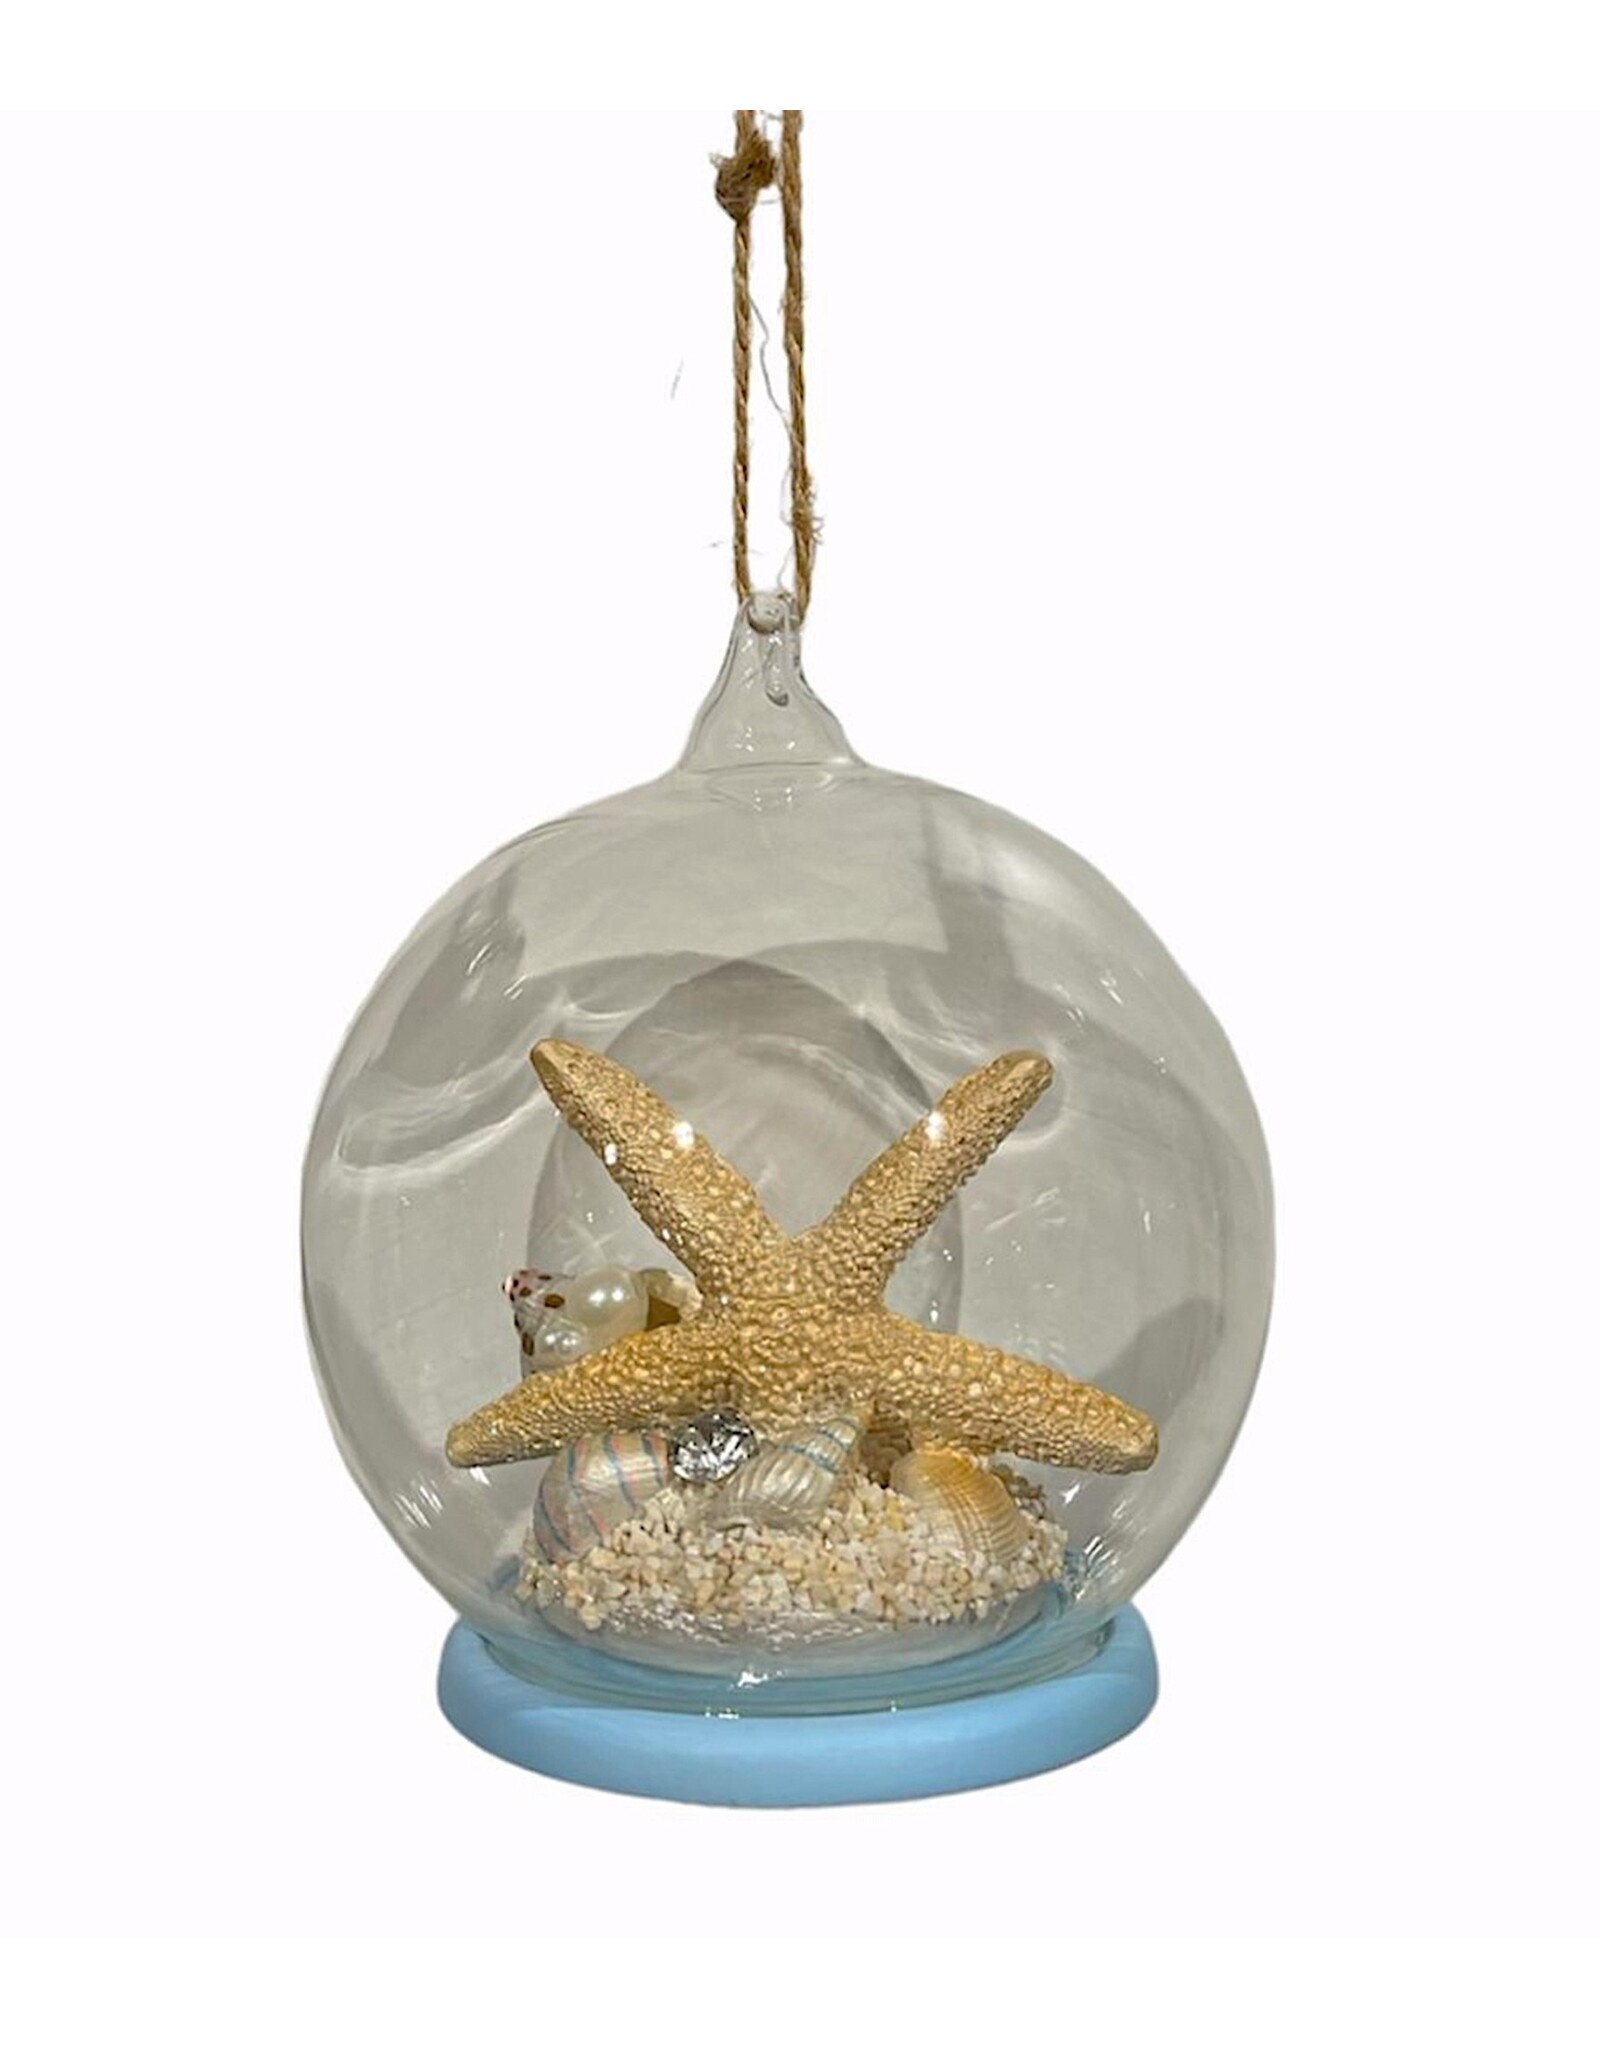 David Christophers Starfish And Sea Shells in Glass Dome Ornament